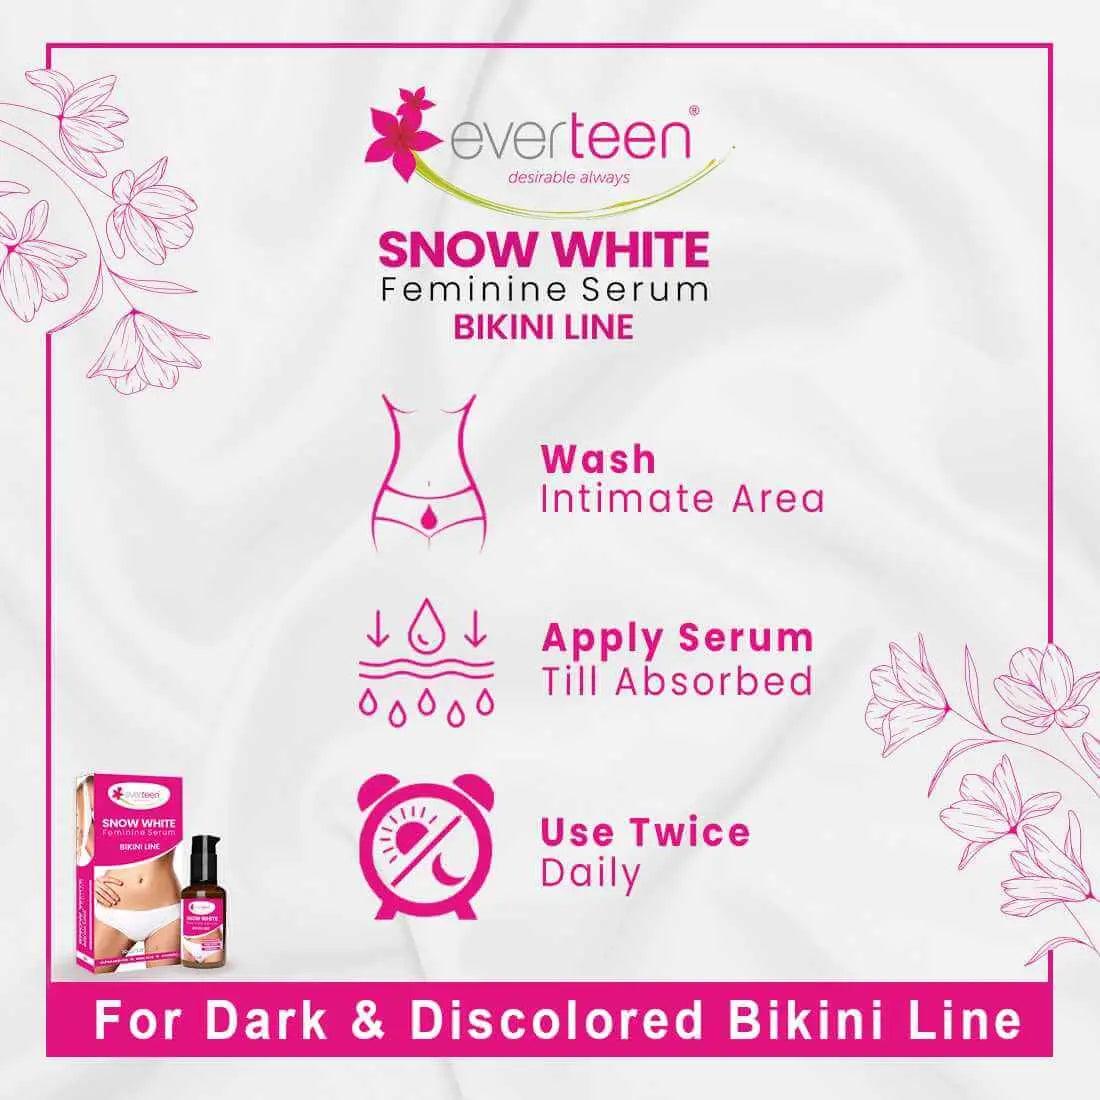 everteen Snow White Feminine Serum for Bikini Line in Women - 30ml